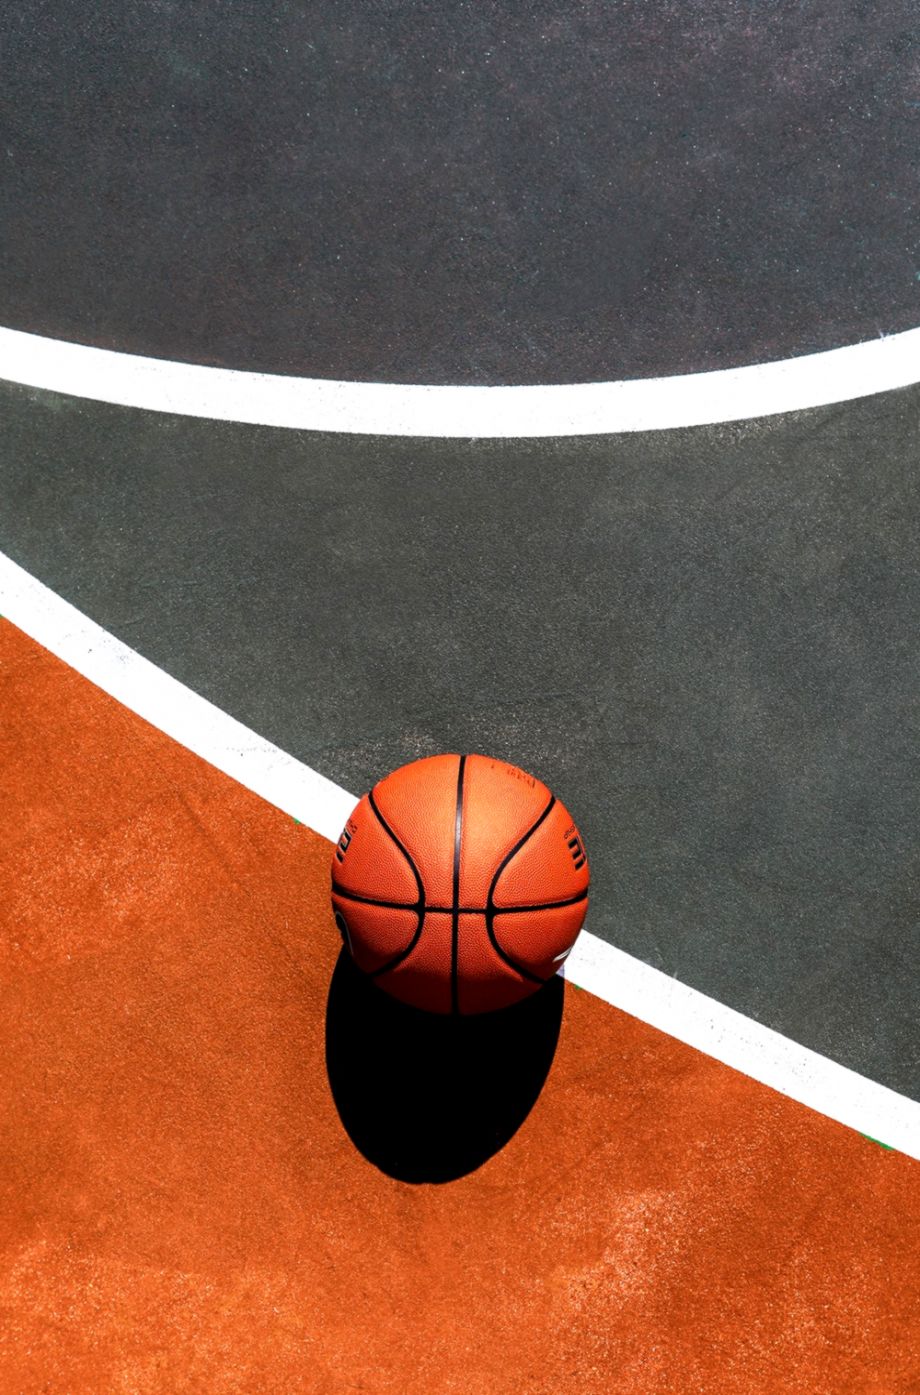 Nike Basketball Hq Wallpaper Background